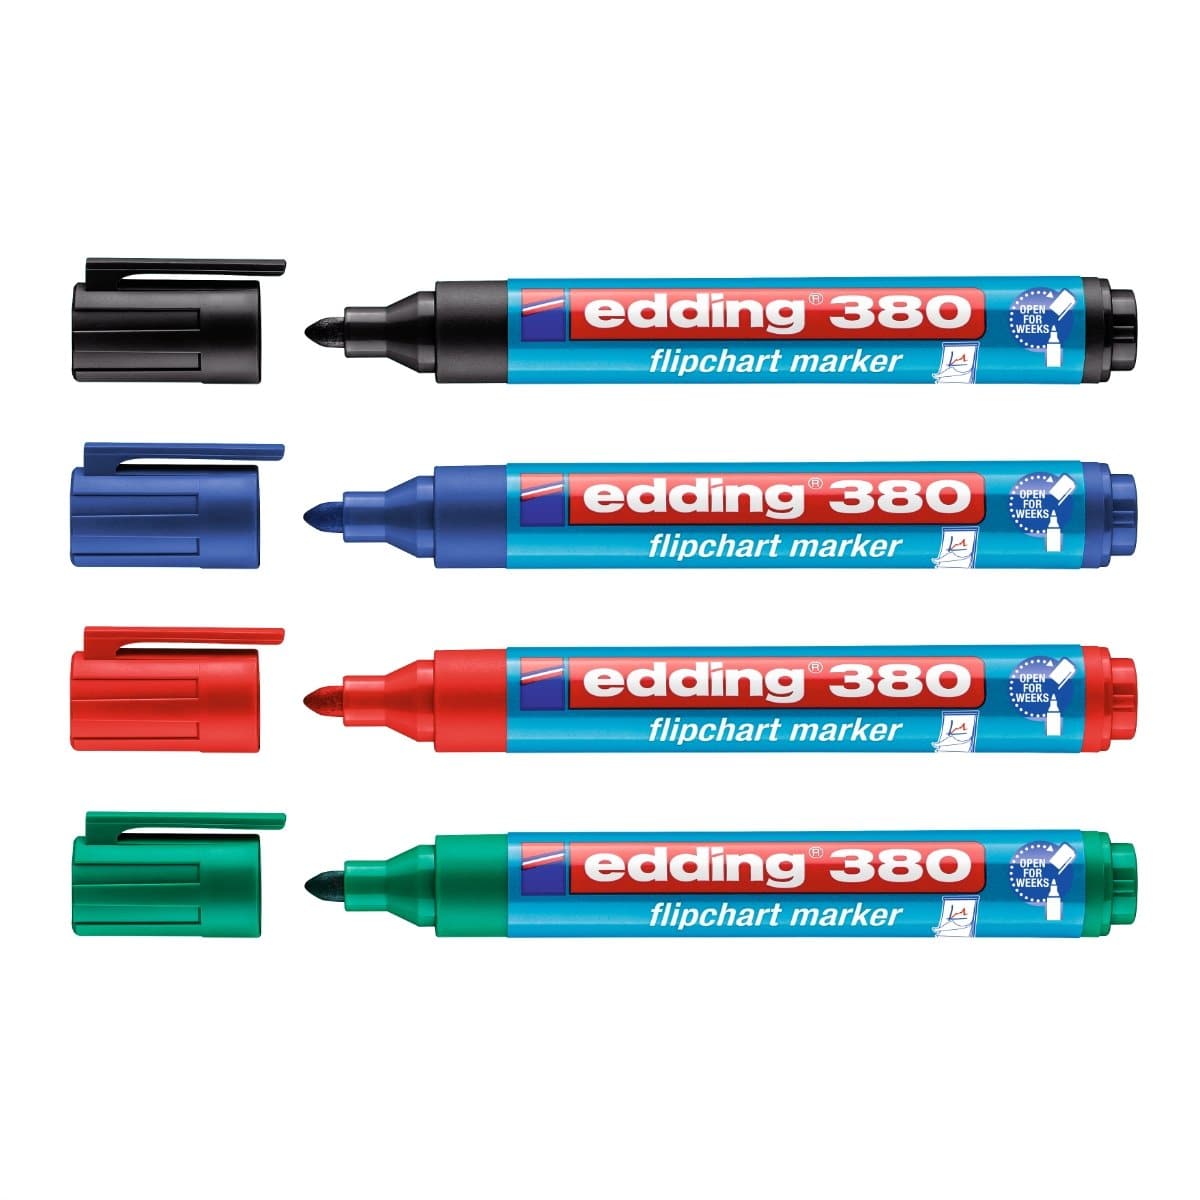 edding 380 Flipchart Marker, 1.5-3mm Bullet Tip, Set of 4, Black/Blue/Green/Red